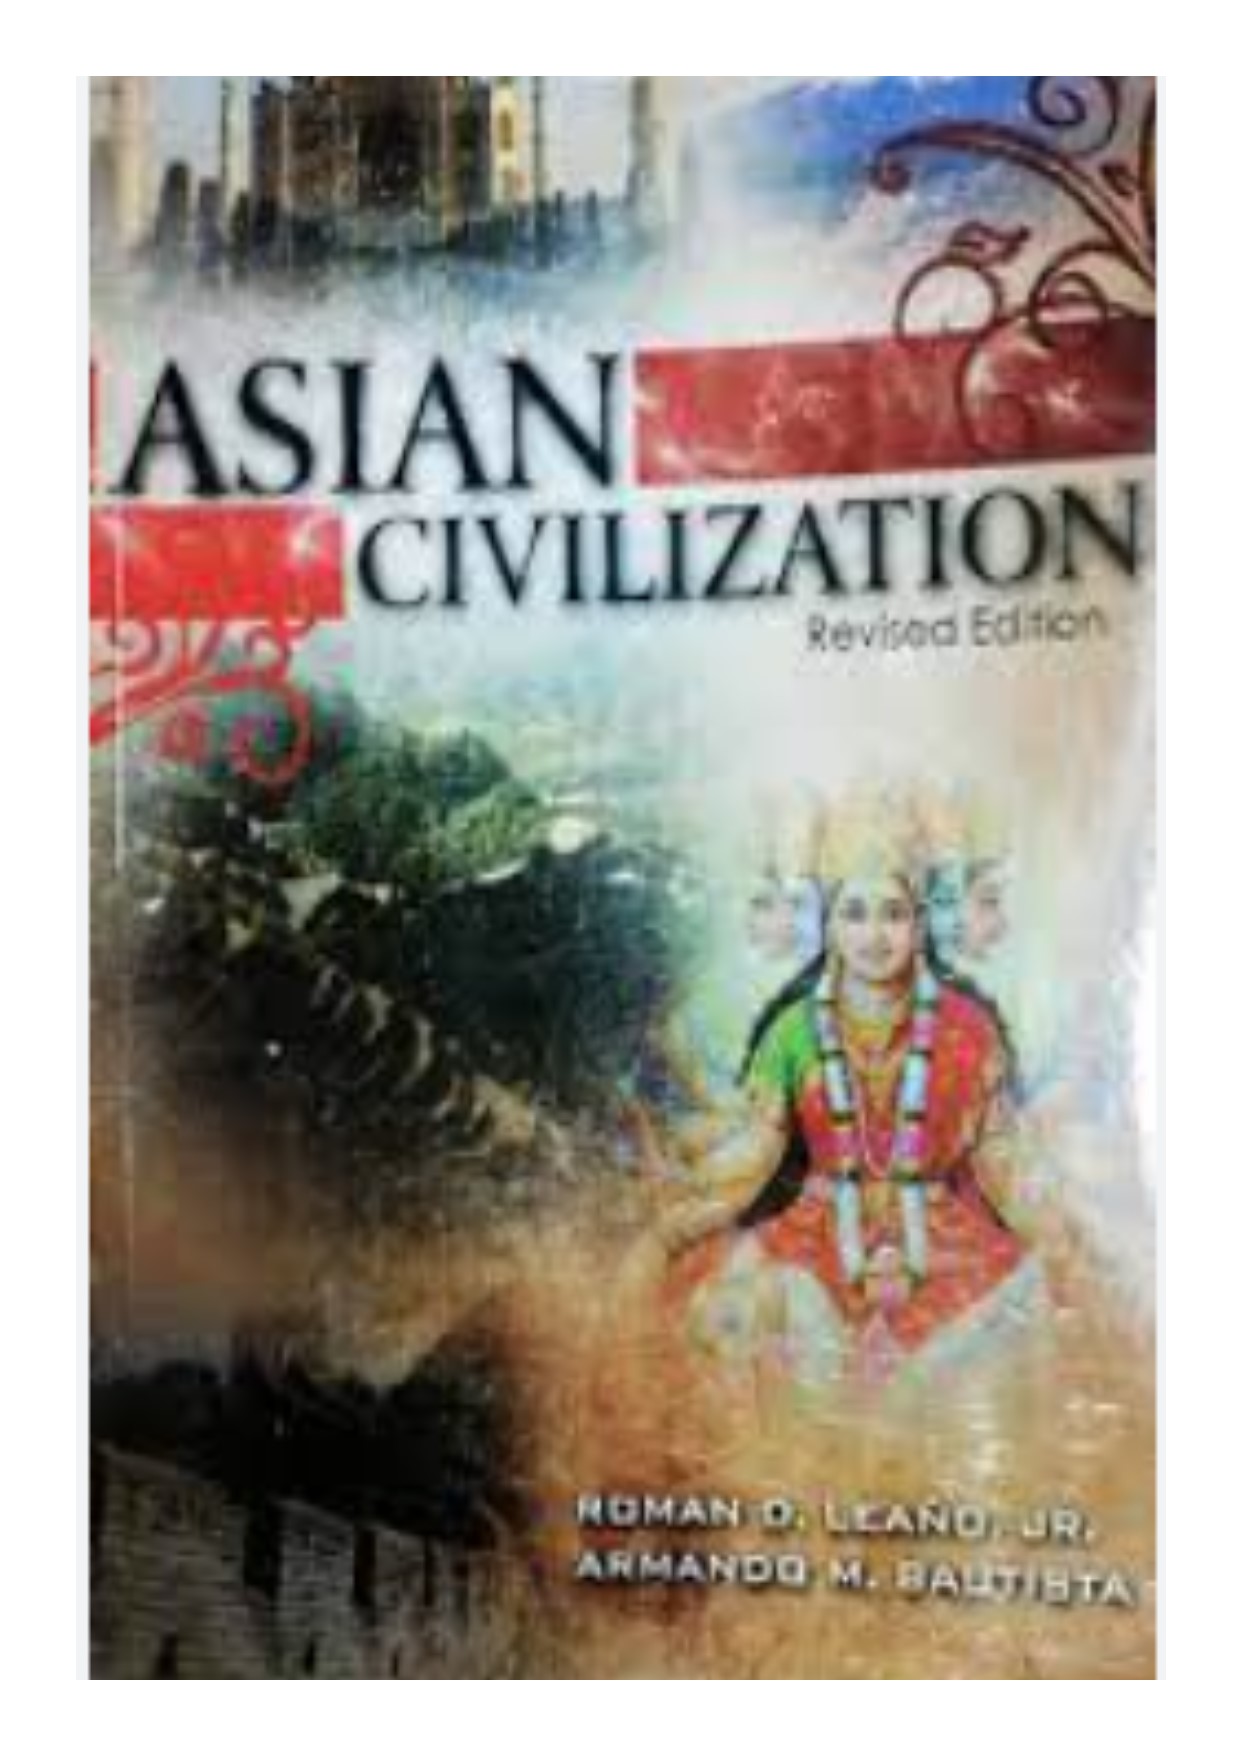 Asian civilization